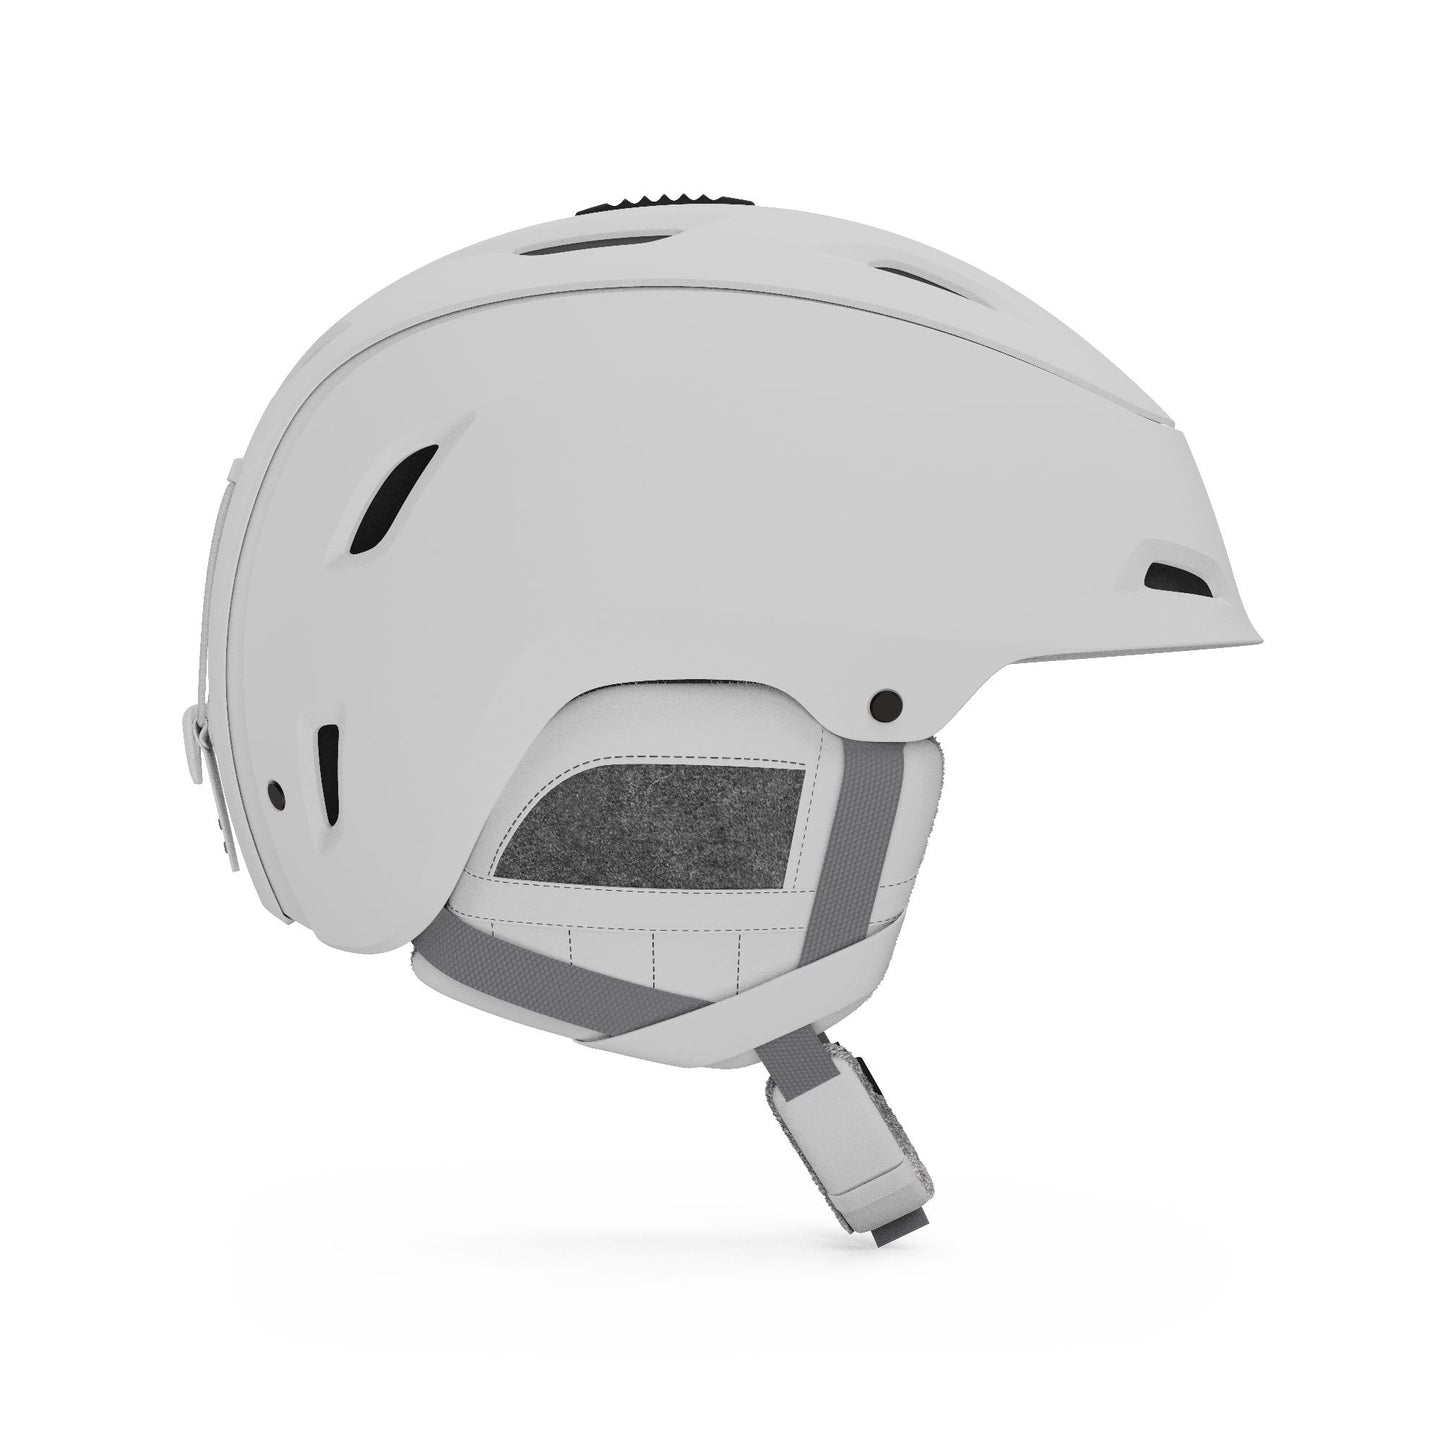 Giro Women's Stellar MIPS Helmet Matte White Snow Helmets